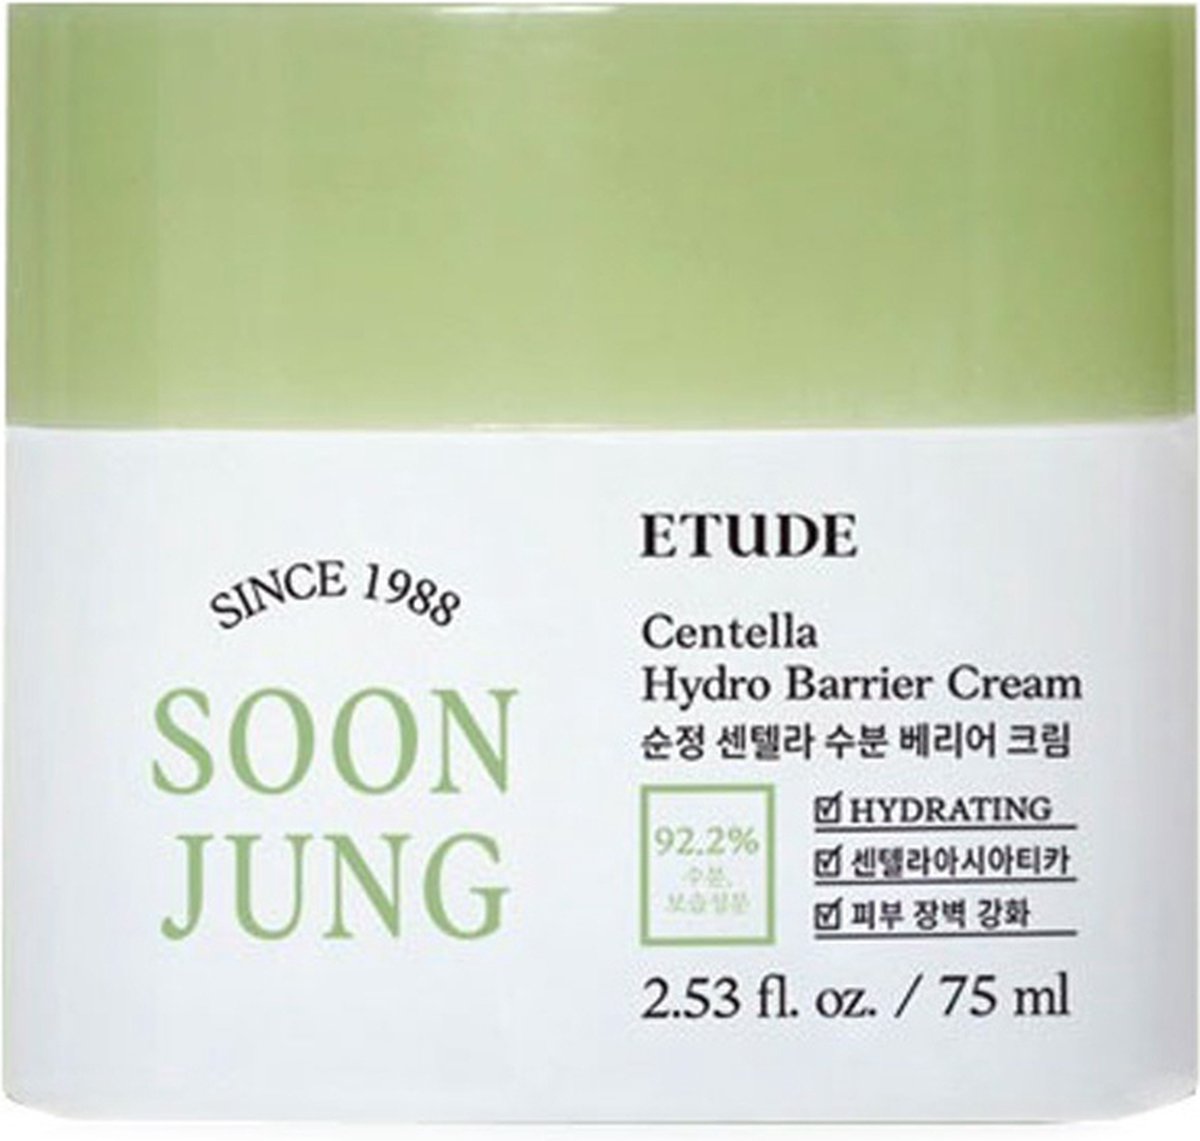 Soon Jung Centella Hydro Barrier Cream - Since 1988 - Etude Korean Skin Beauty - 75ml Gezichtsverzorging - Rosacea - Rode vlekken in gezicht - Centella Asiatica